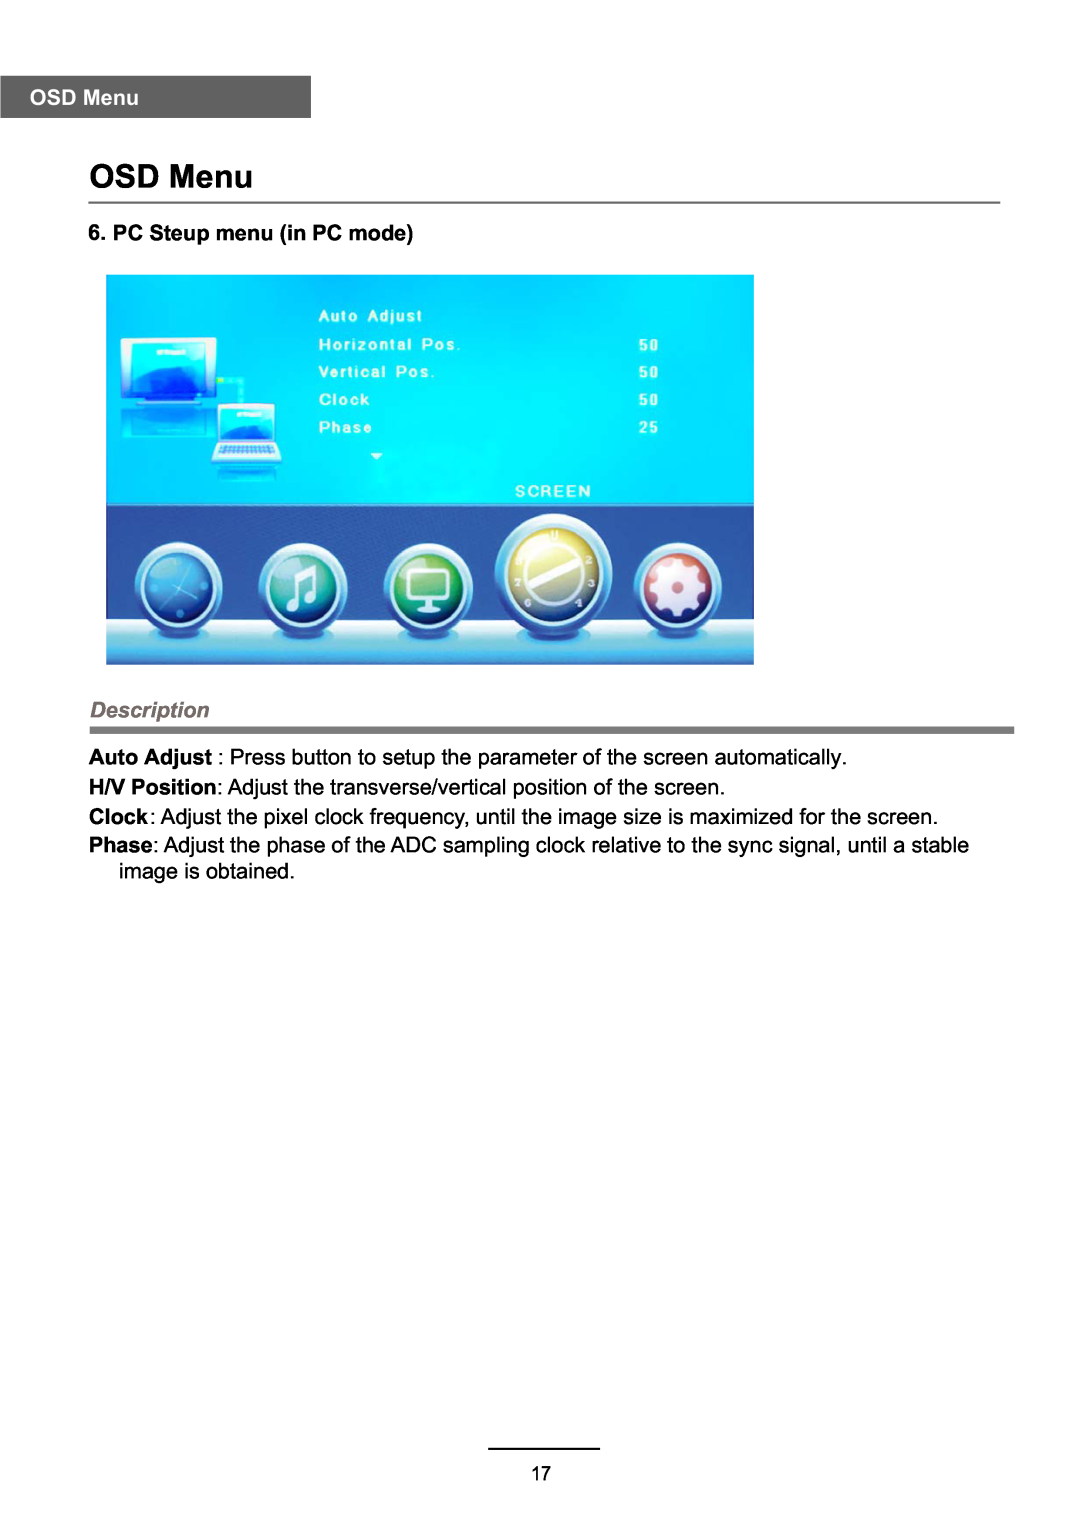 Haier L39Z10A manual OSD Menu, PC Steup menu in PC mode, Description 